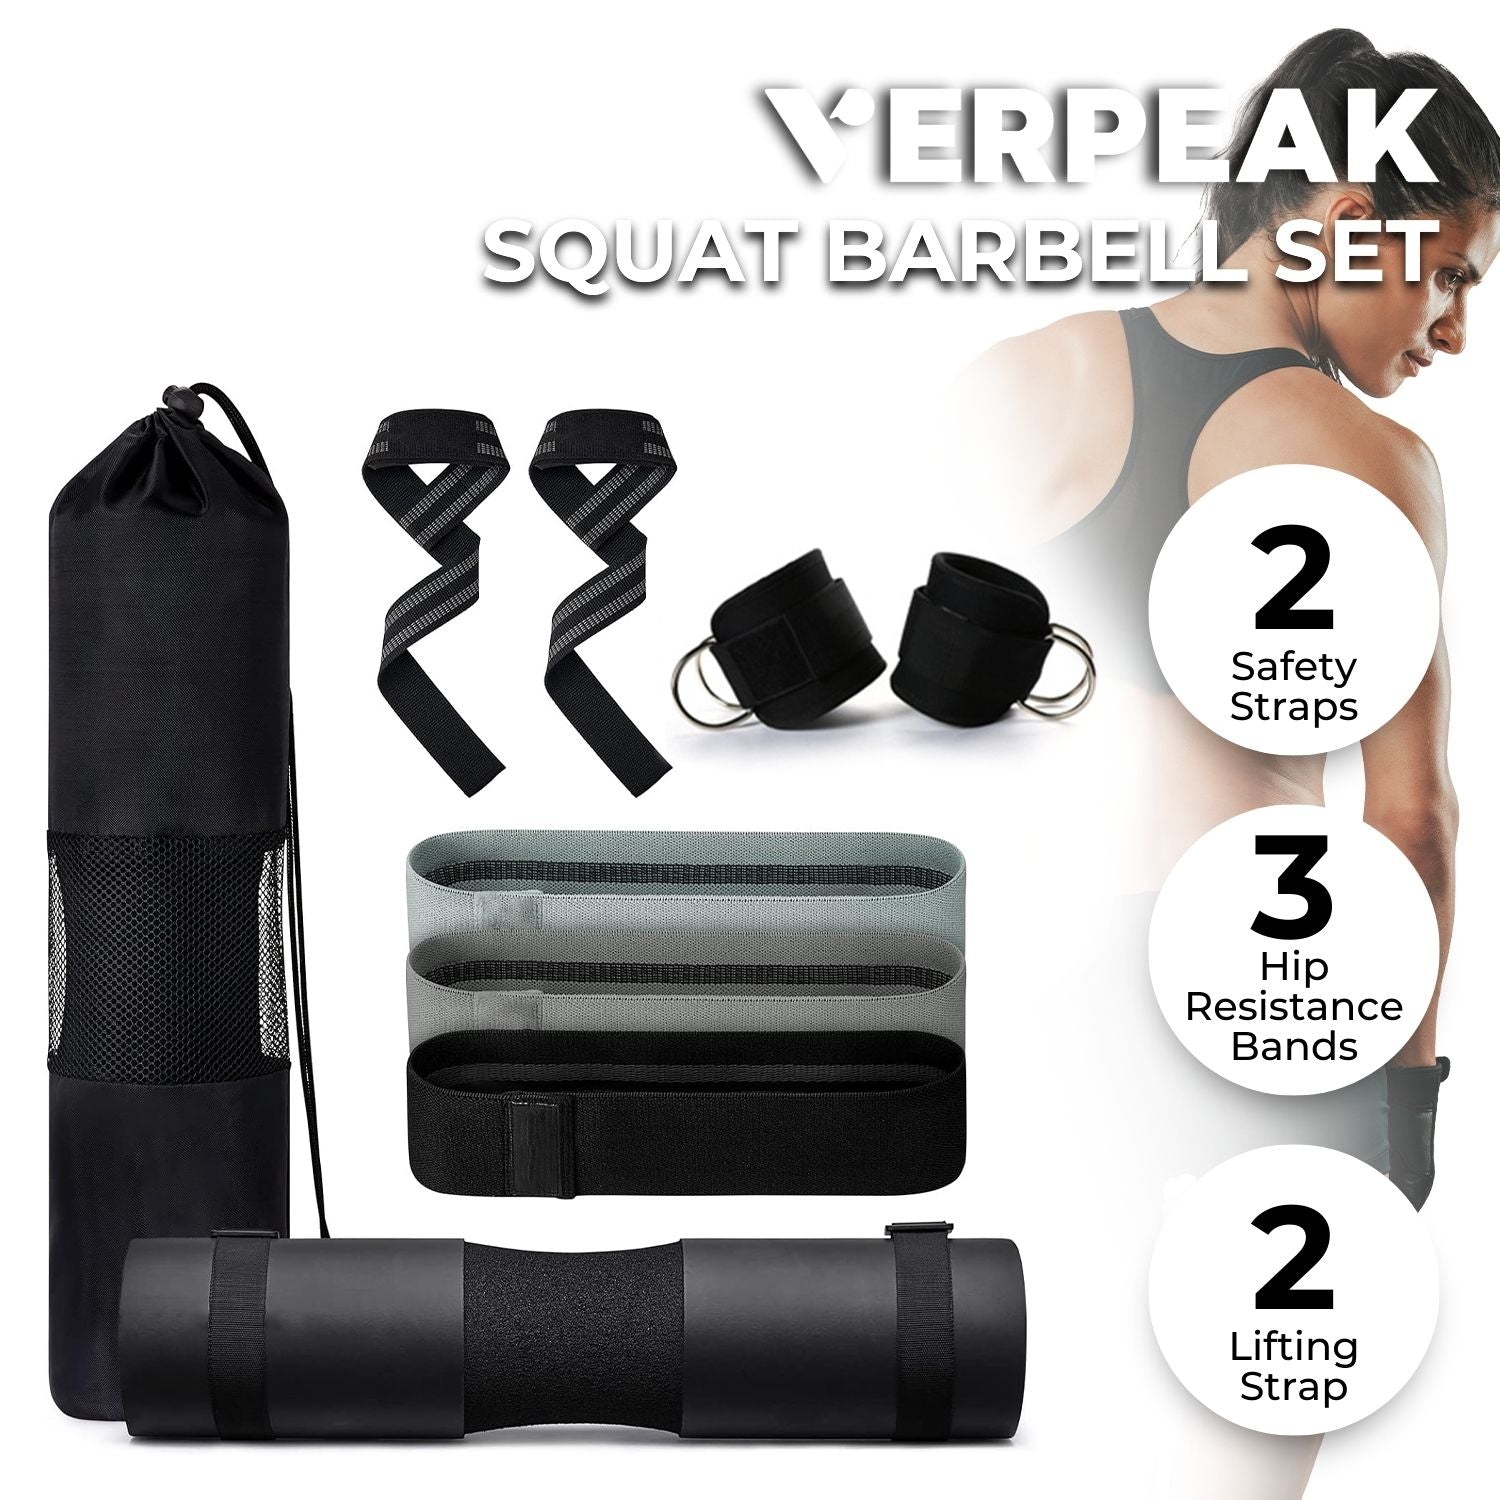 VERPEAK Barbell Squat Pad set,2 Safety Straps, 3 Hip Resistance Bands, 2 Lifting Strap, Barbell Pad and Bag (Black)